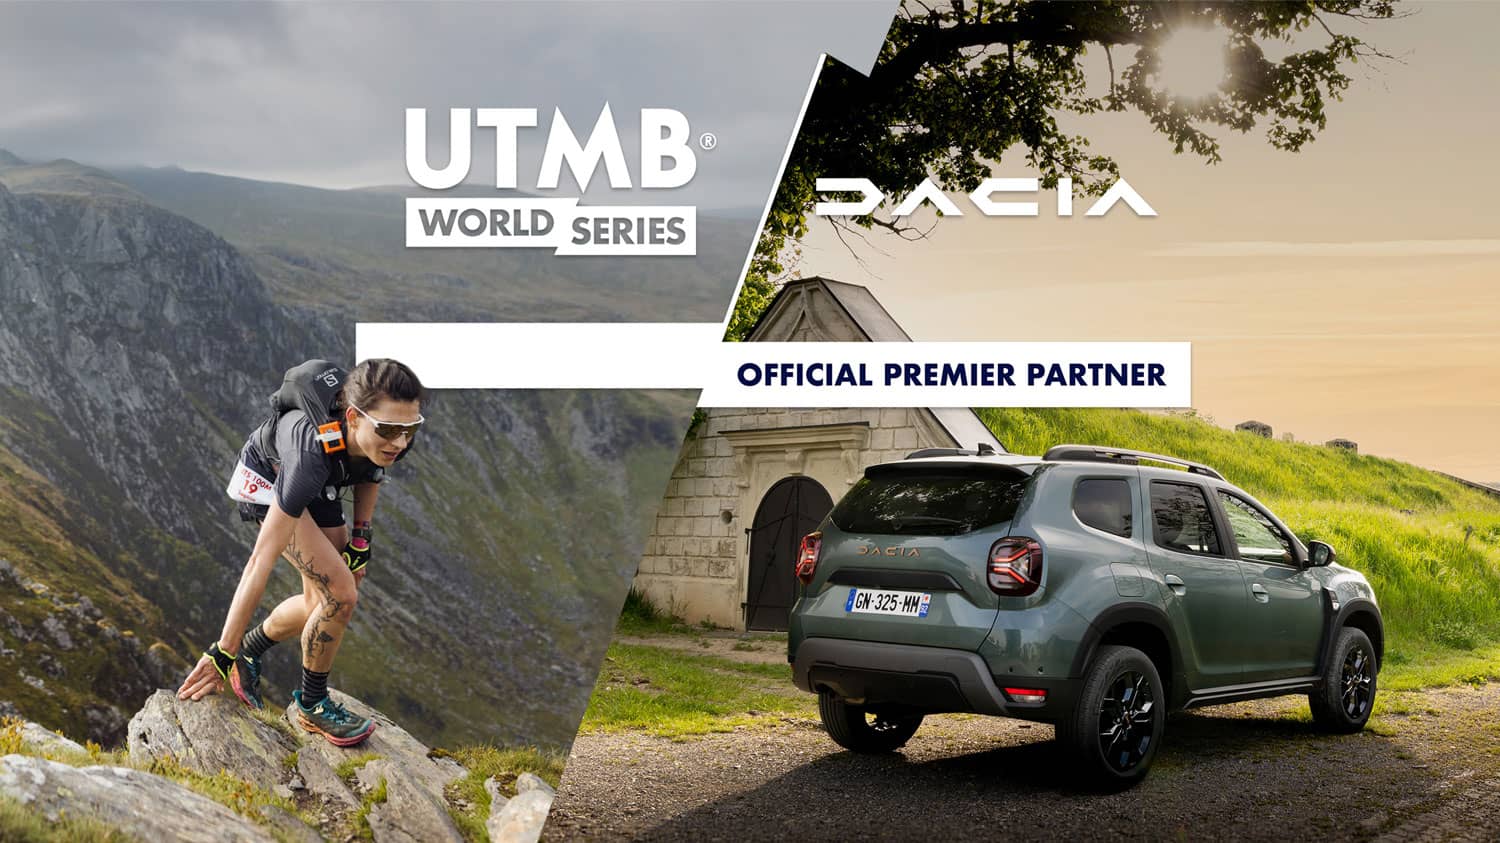 UTMB World Series Dacia official premier partner